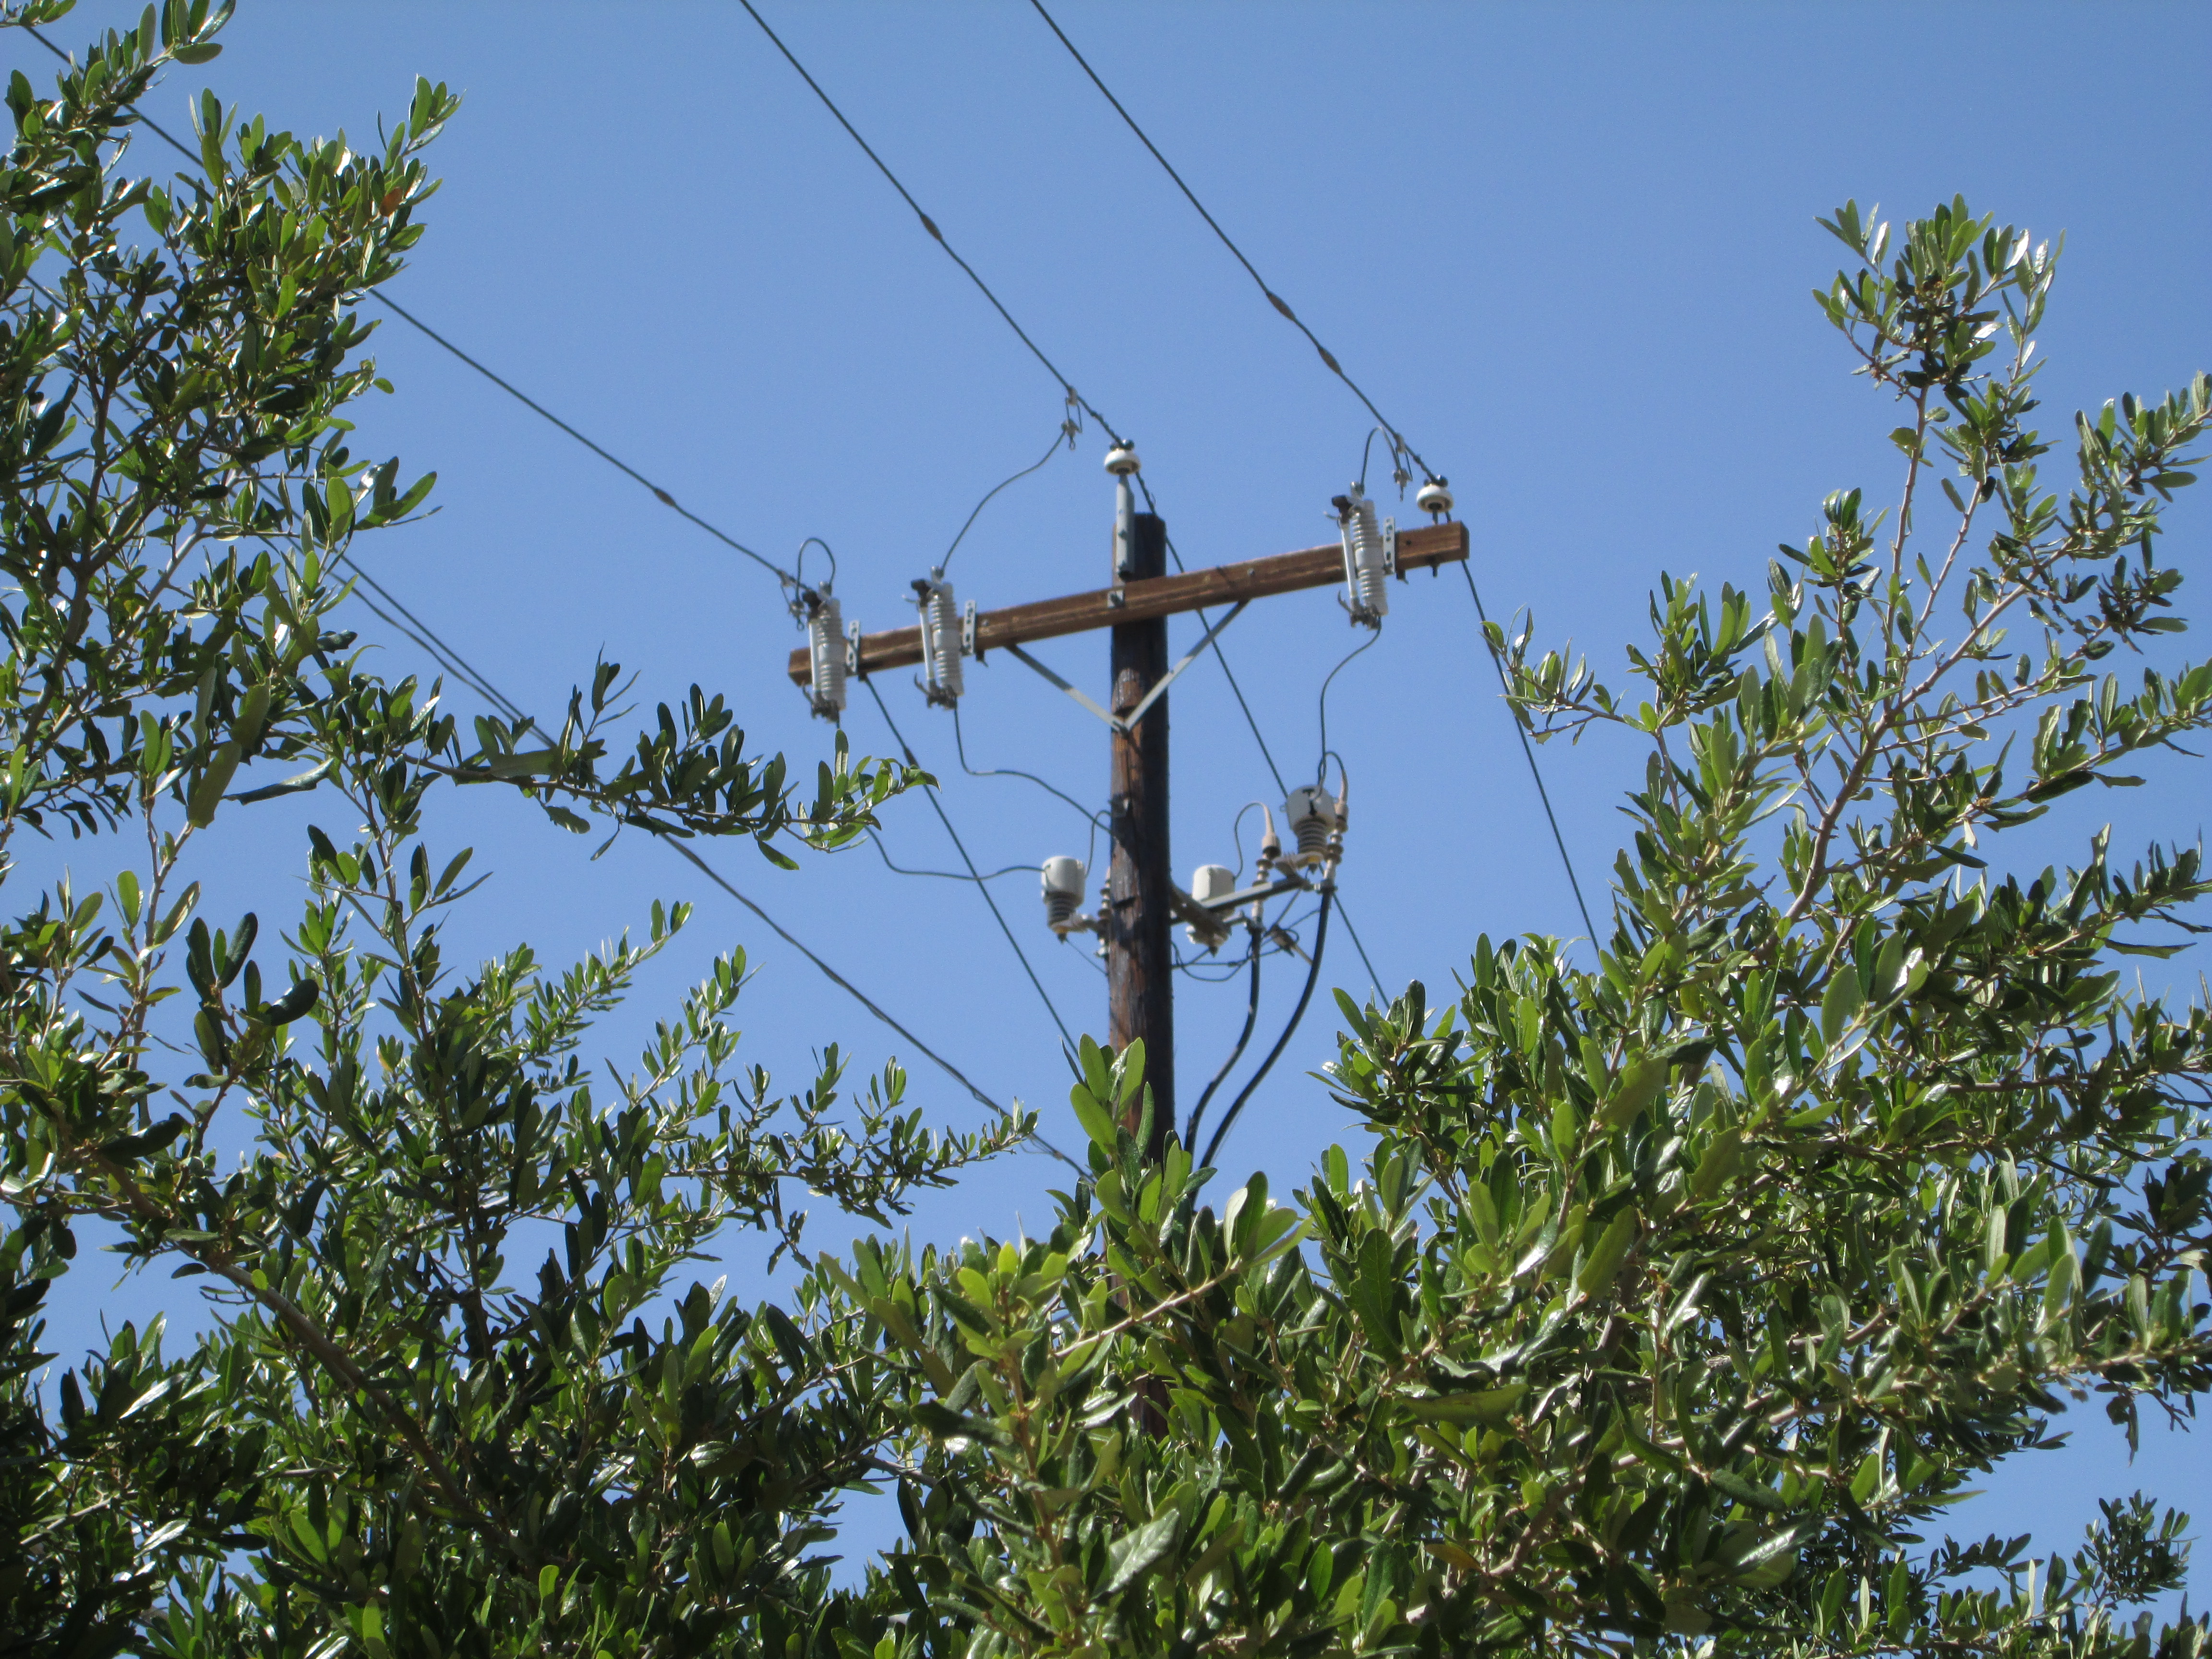 Power lines running through trees.